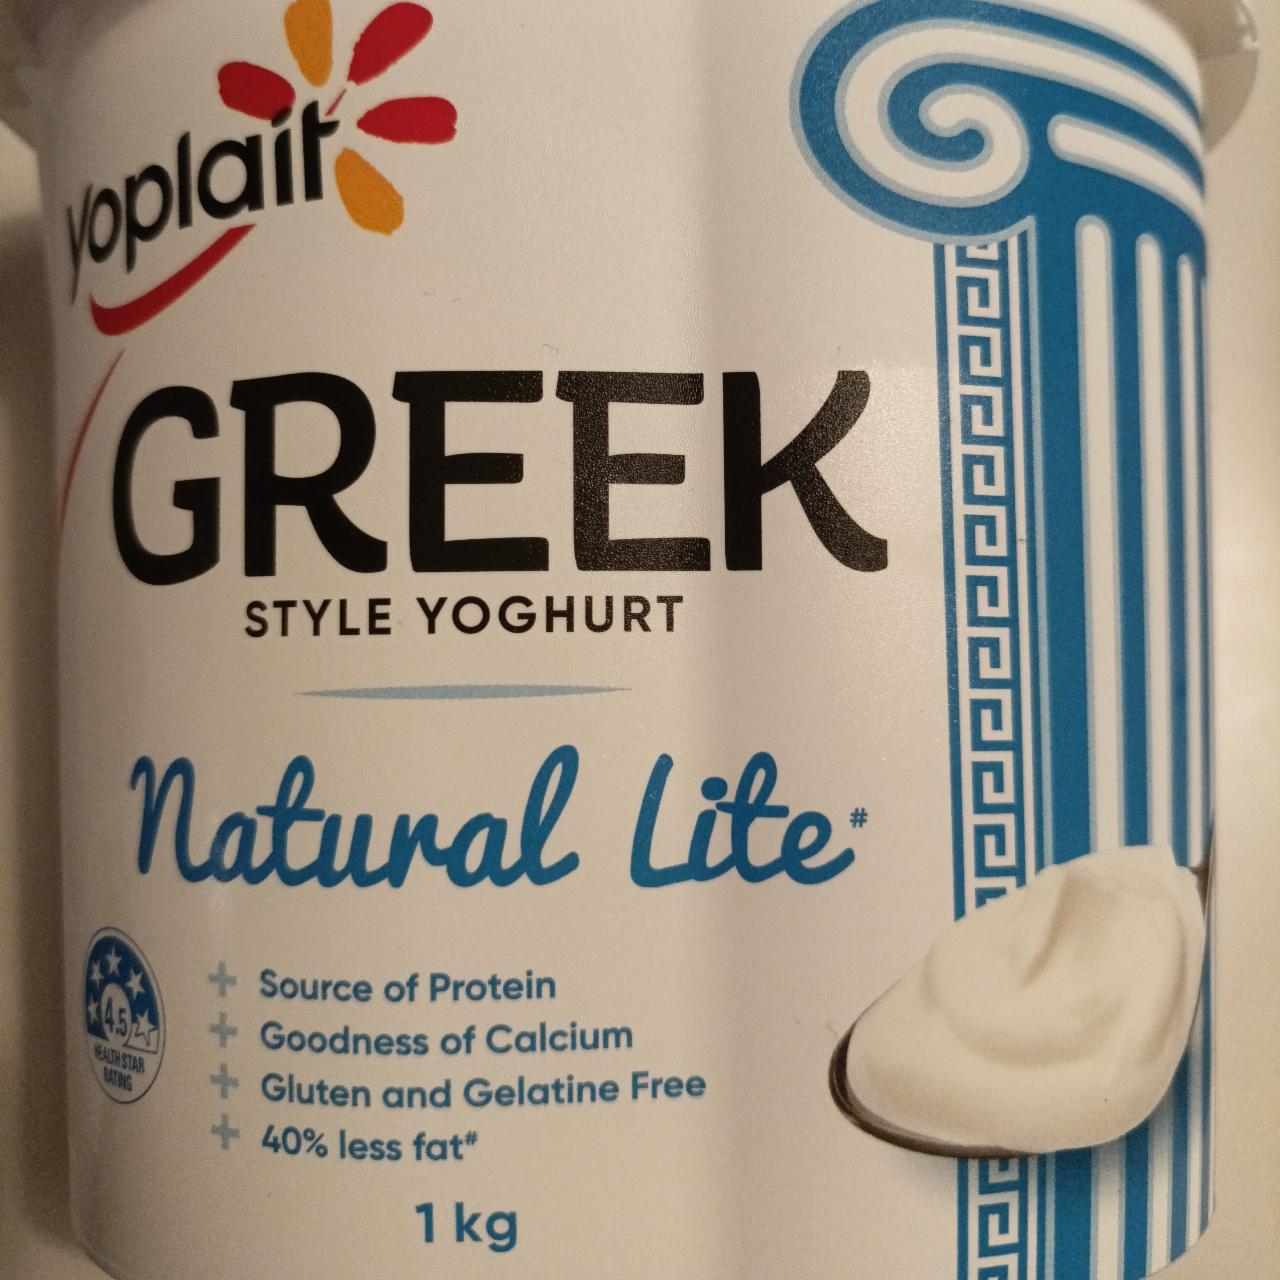 Fotografie - Greek Style Yoghurt Natural Lite Yoplait